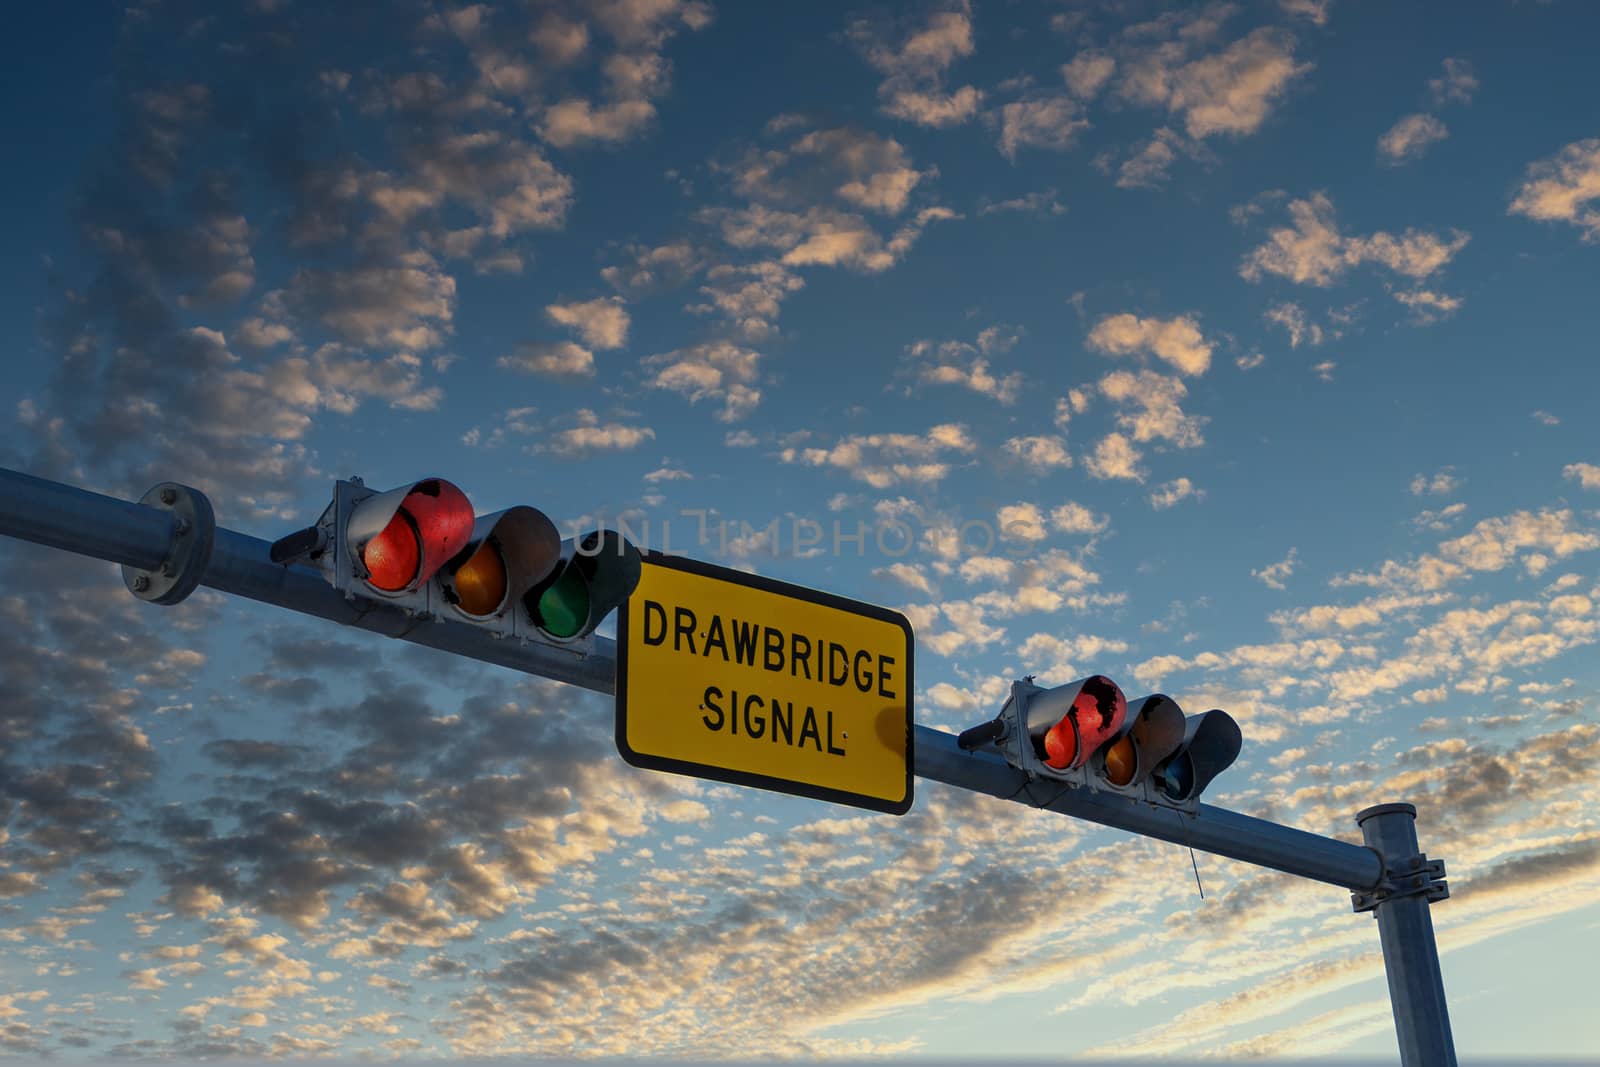 Drawbridge Closed Signal at Sunset by dbvirago